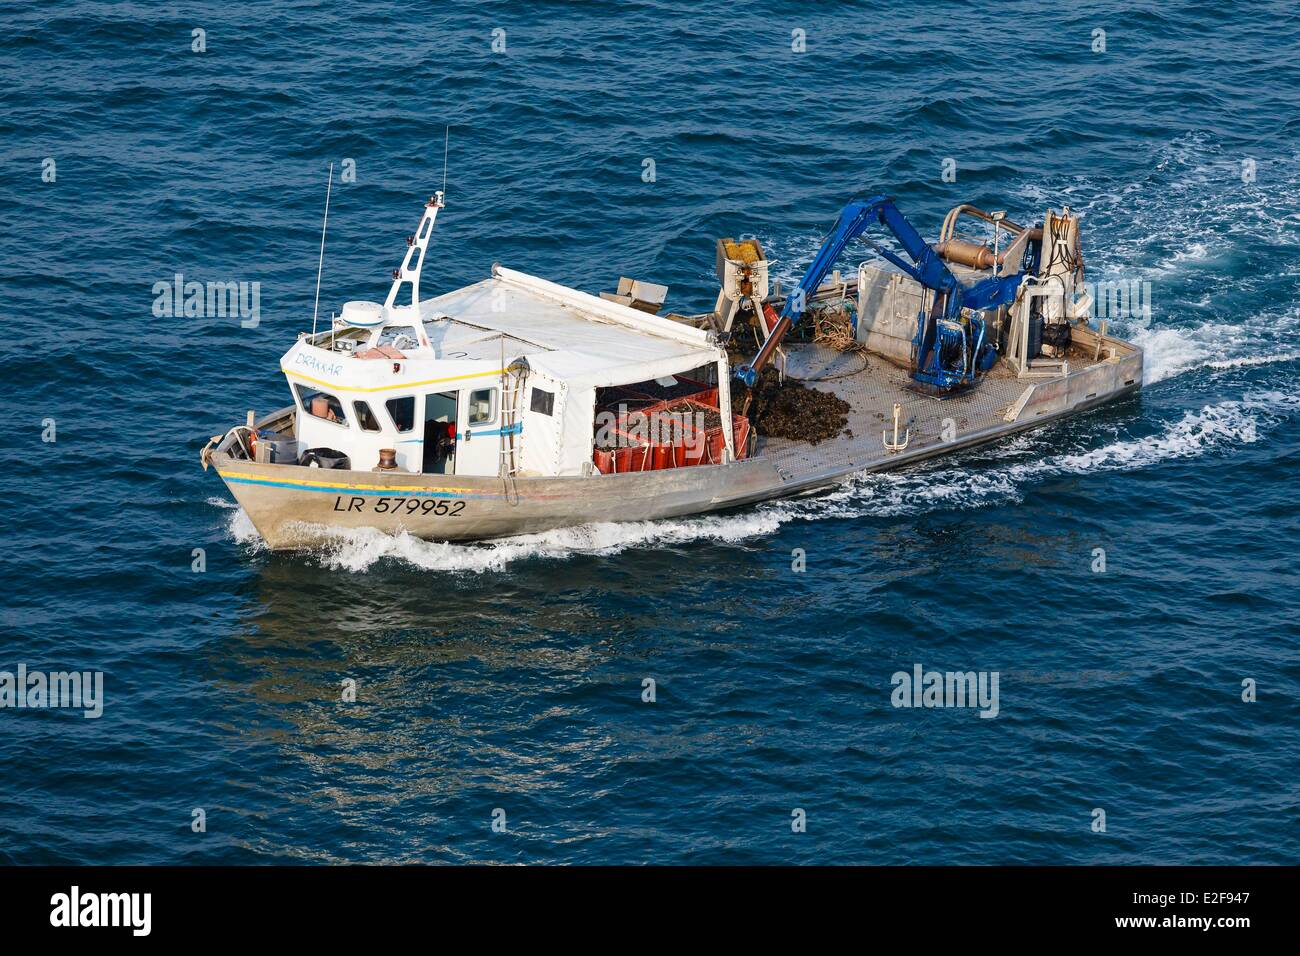 France, Vendee, La Faute-sur-Mer, mussel farm boat (aerial view) Stock Photo